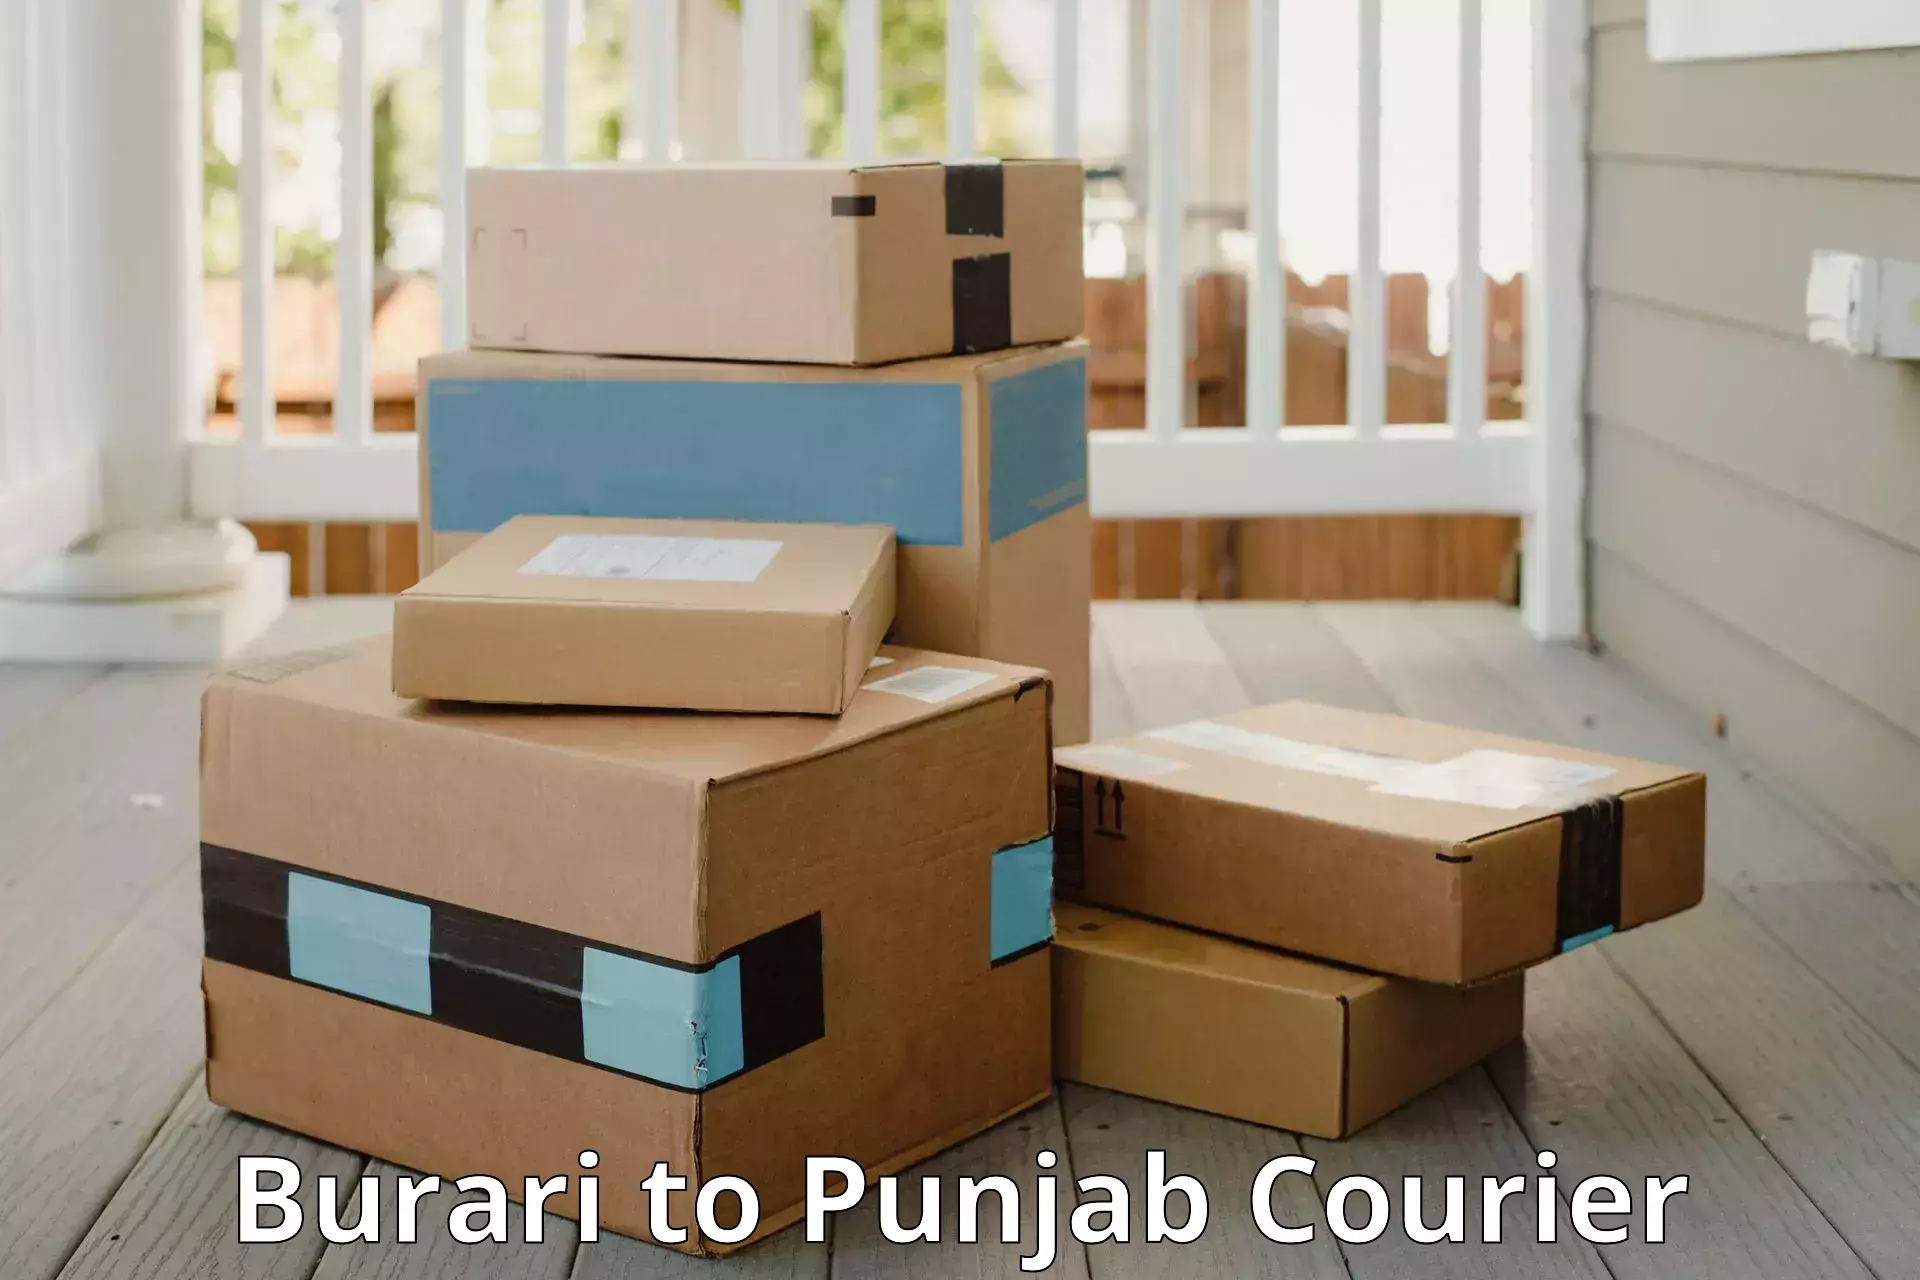 Hassle-free luggage shipping in Burari to Punjab